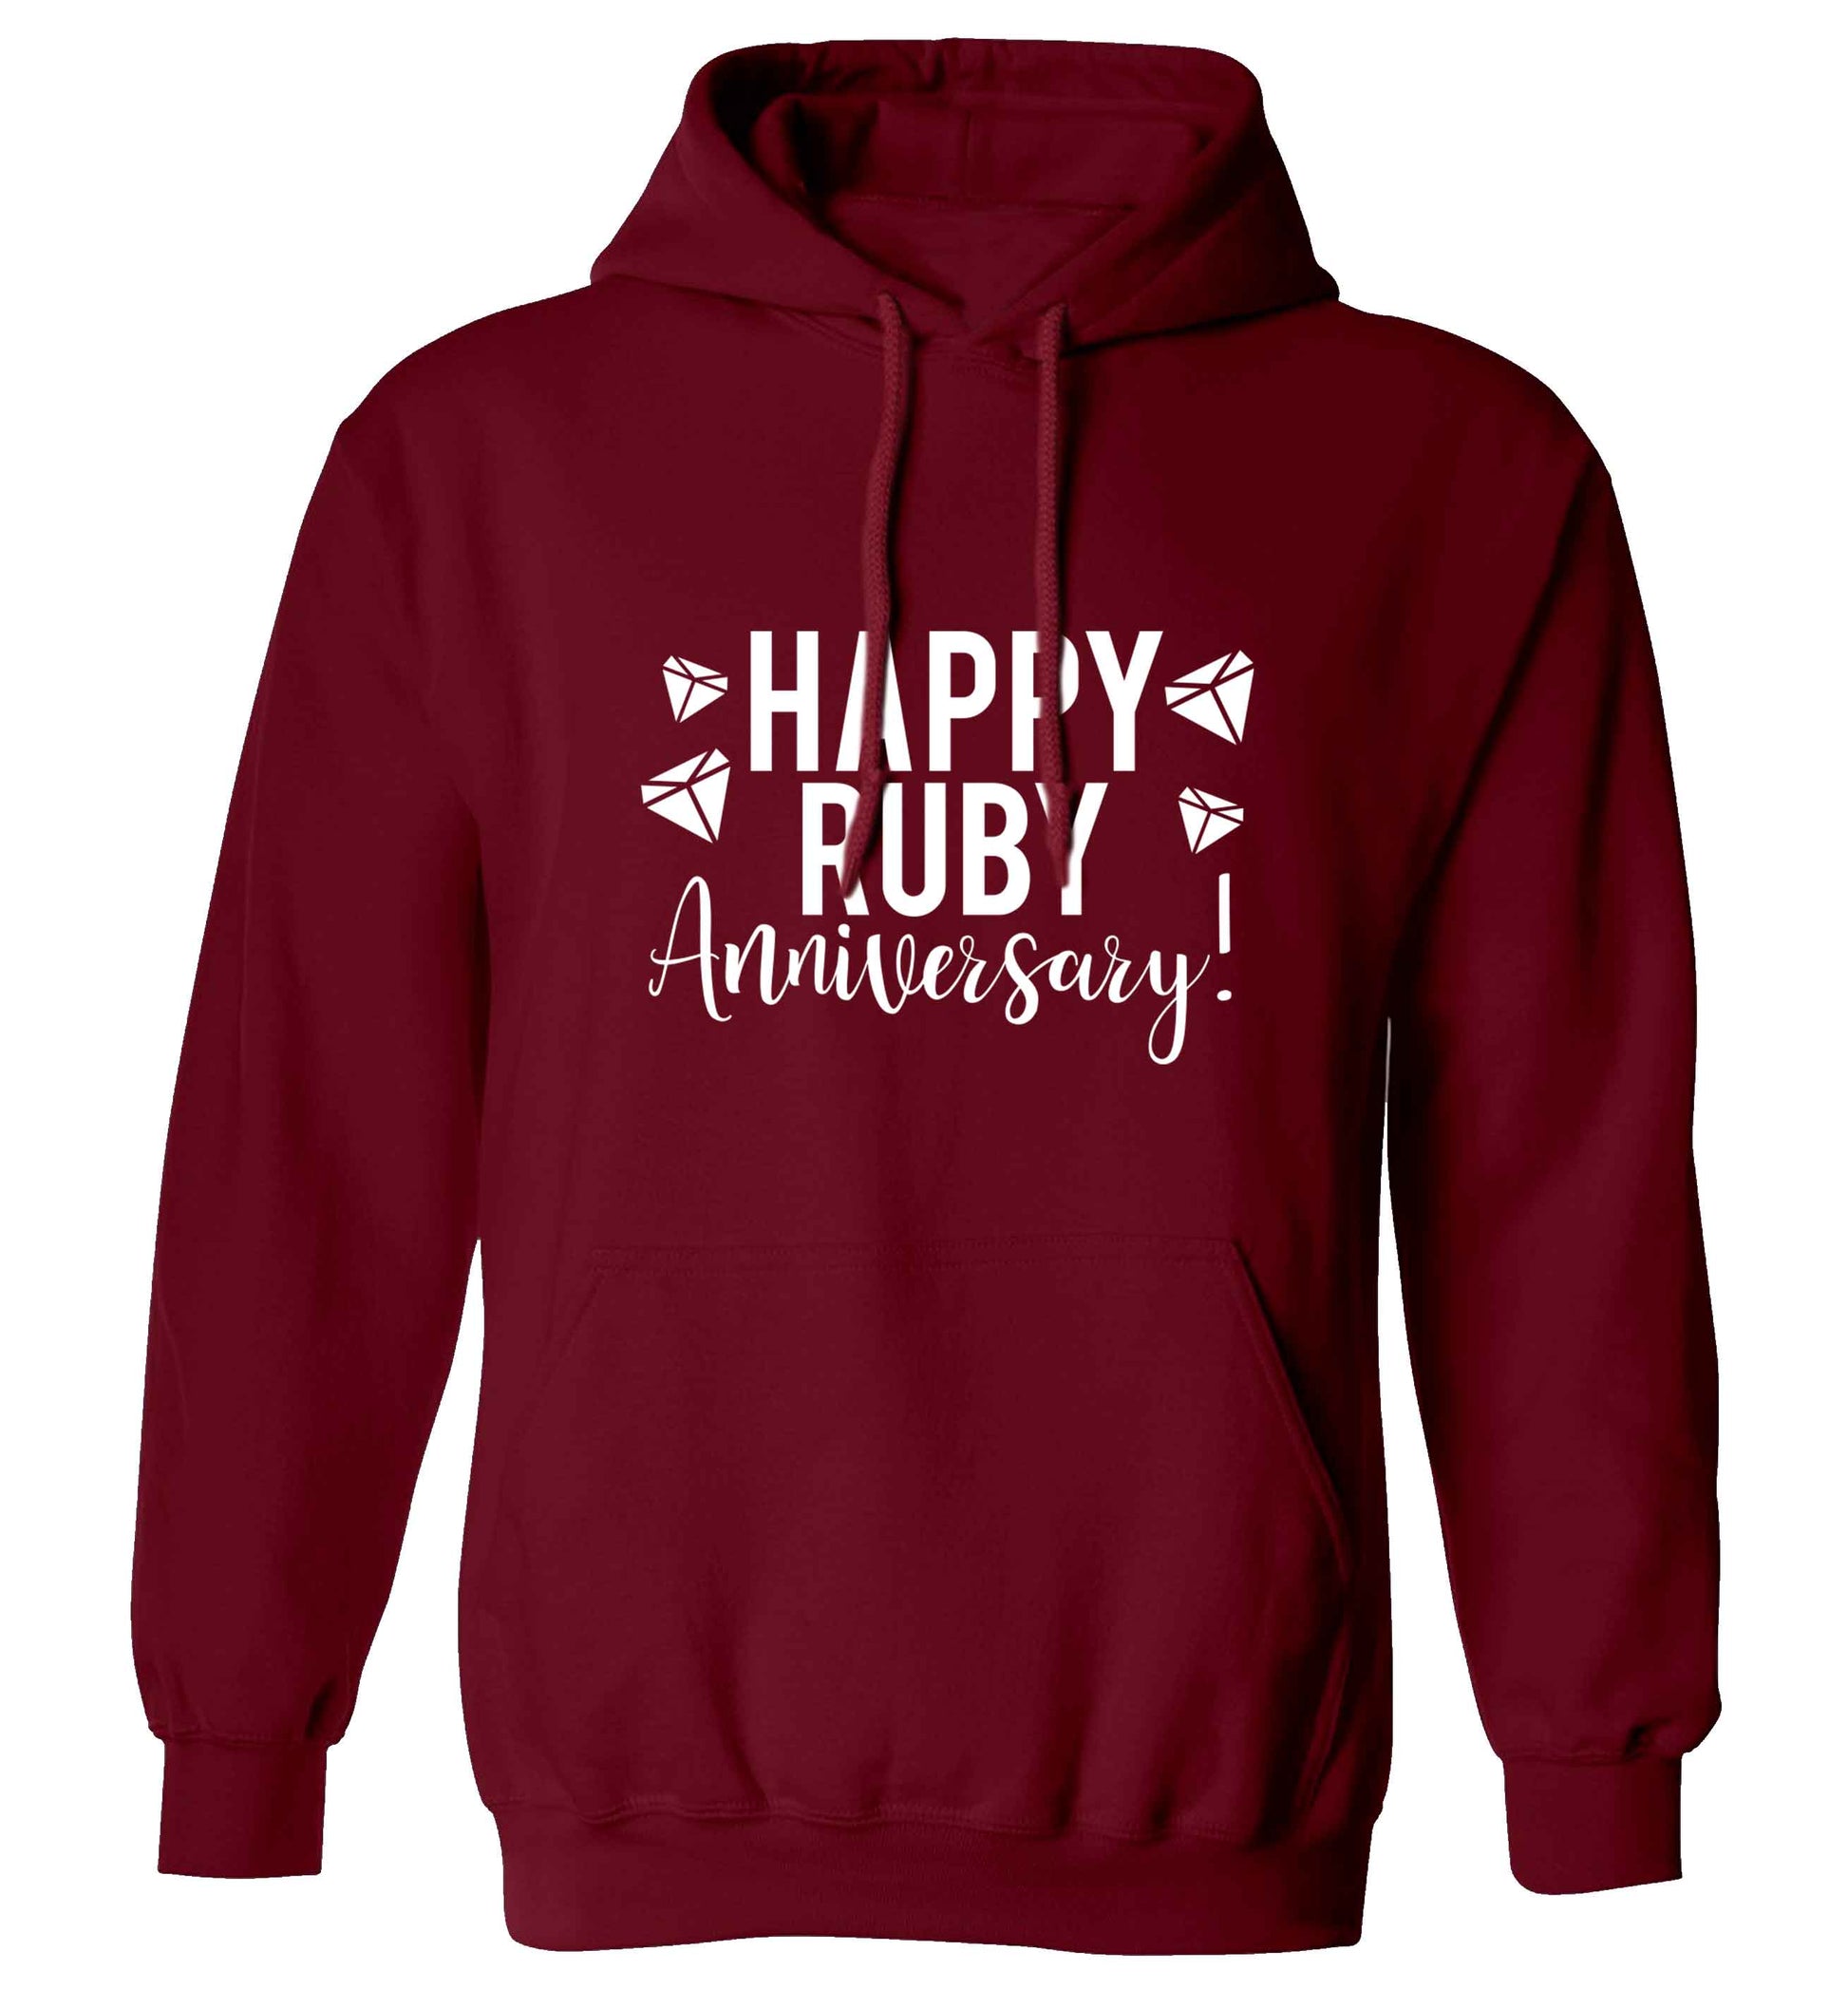 Happy ruby anniversary! adults unisex maroon hoodie 2XL